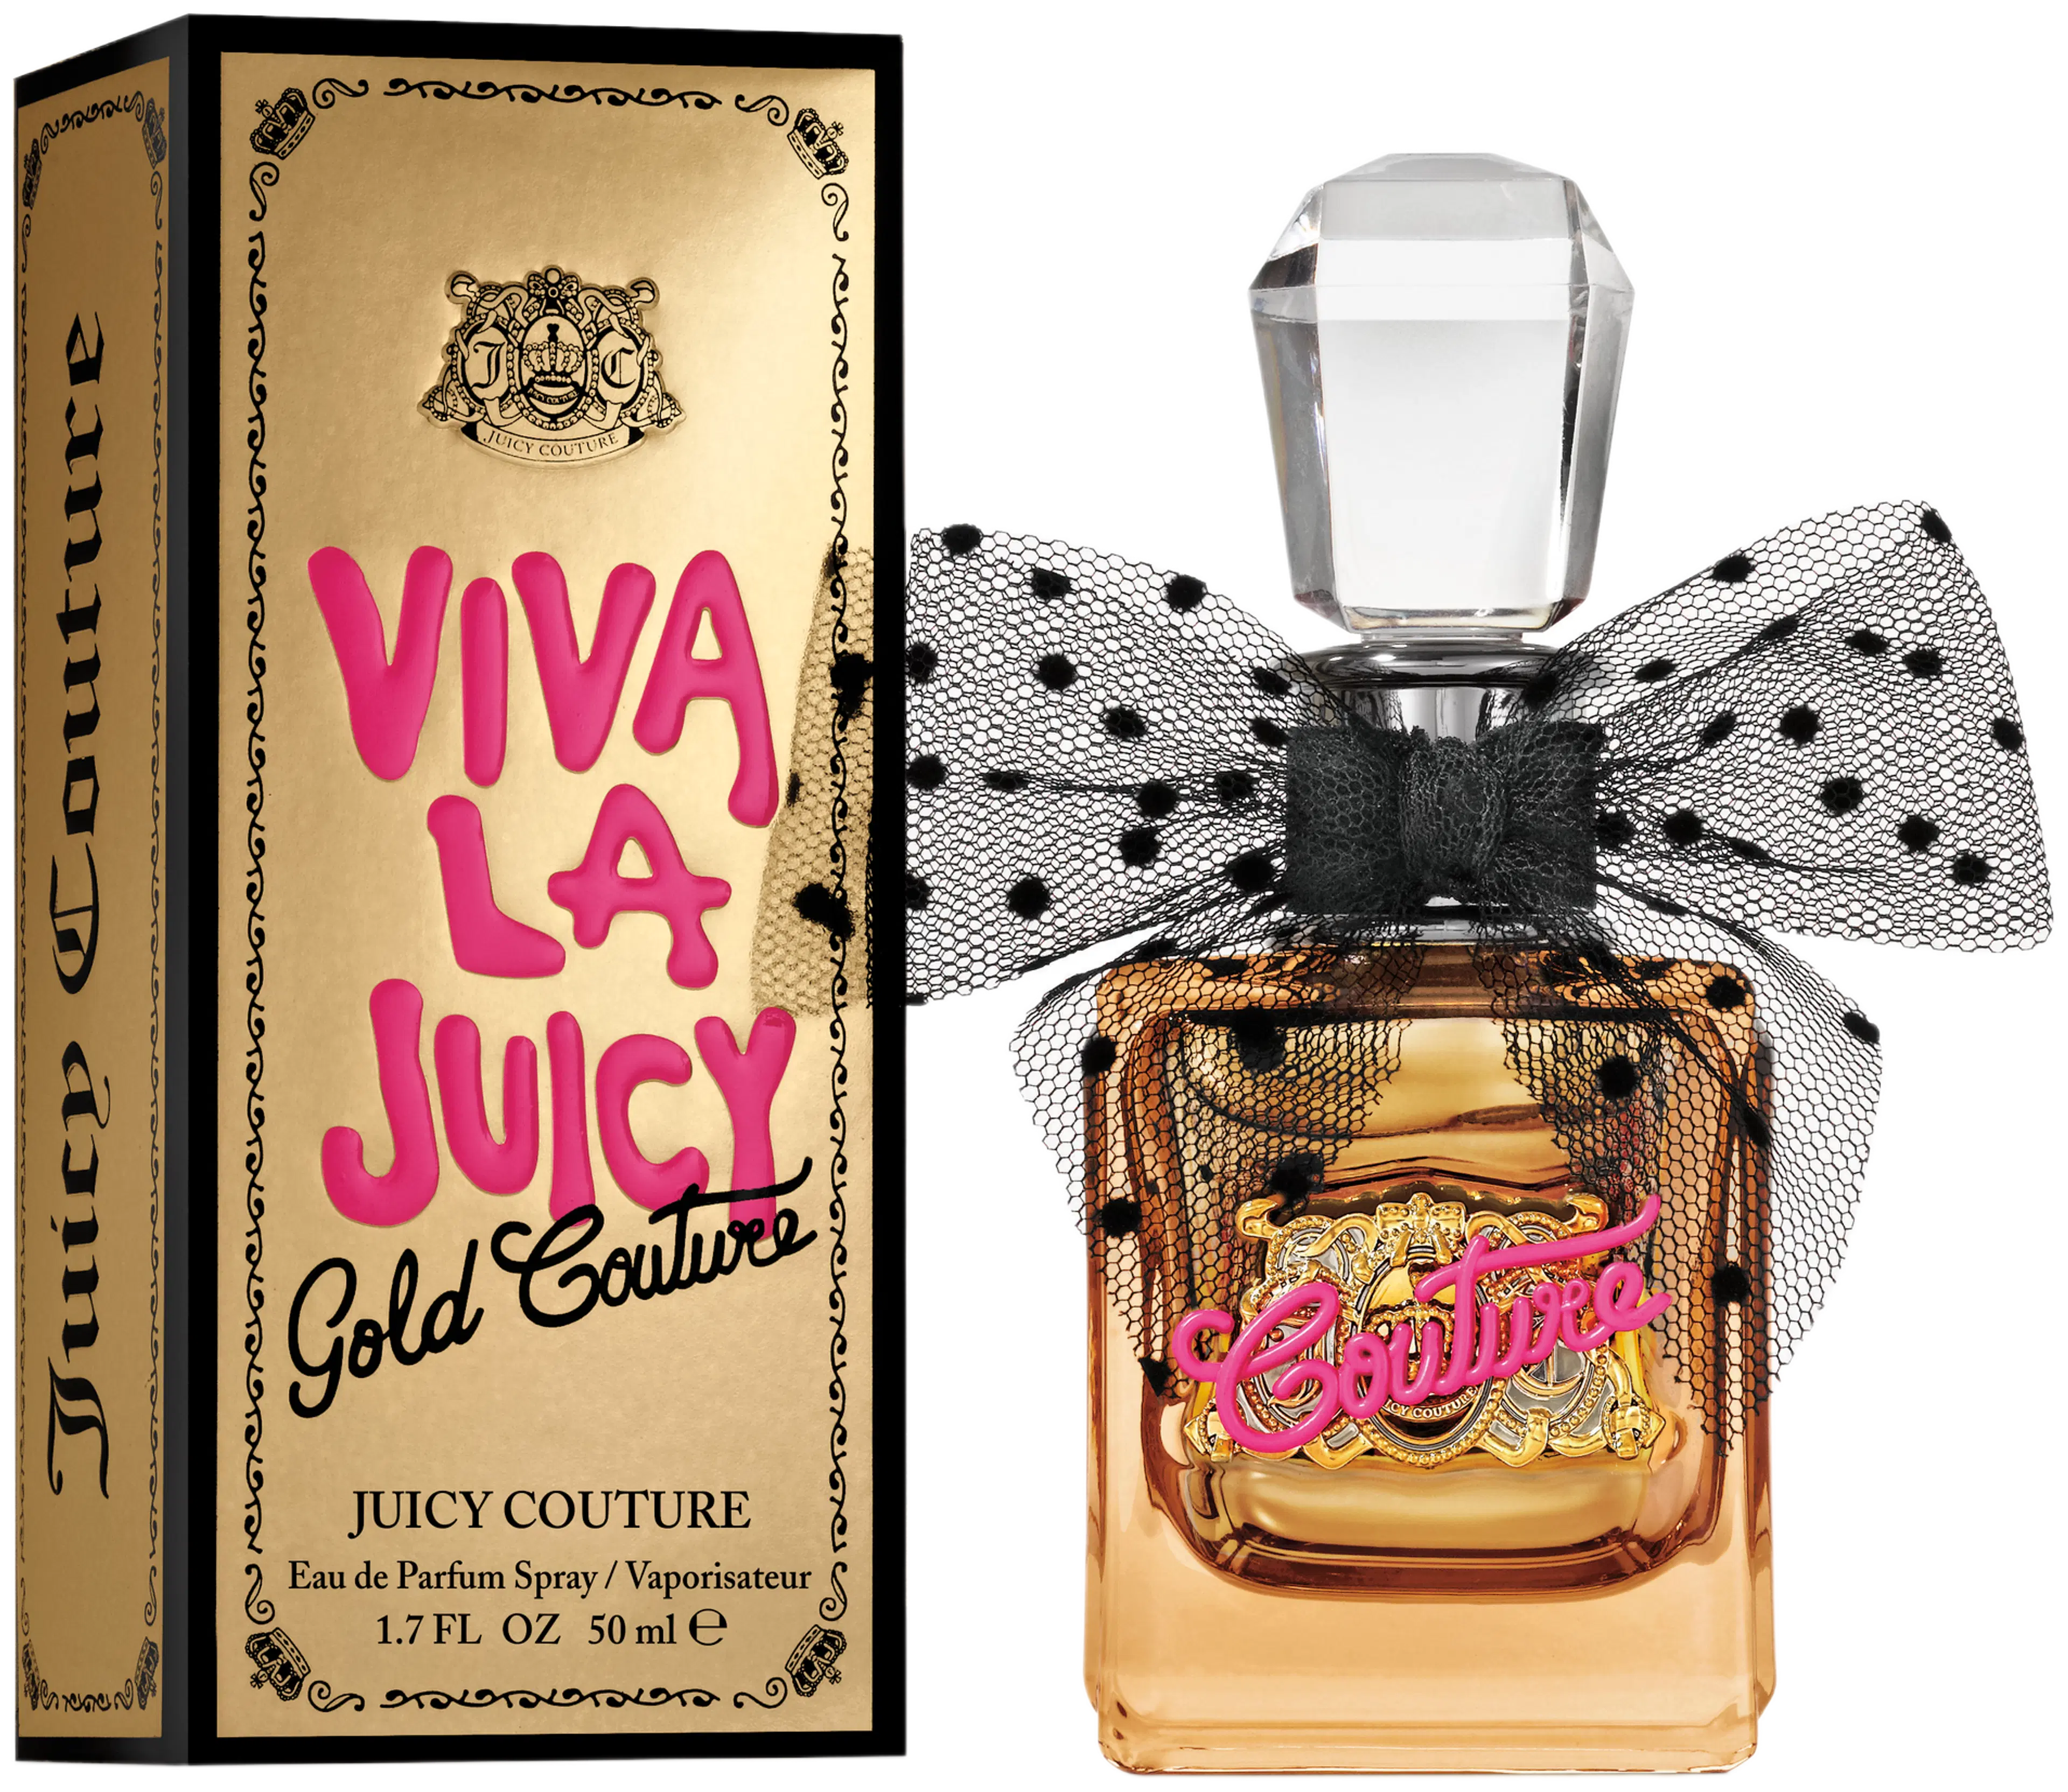 Juicy Couture Viva La Juicy Gold EdP tuoksu 50ml